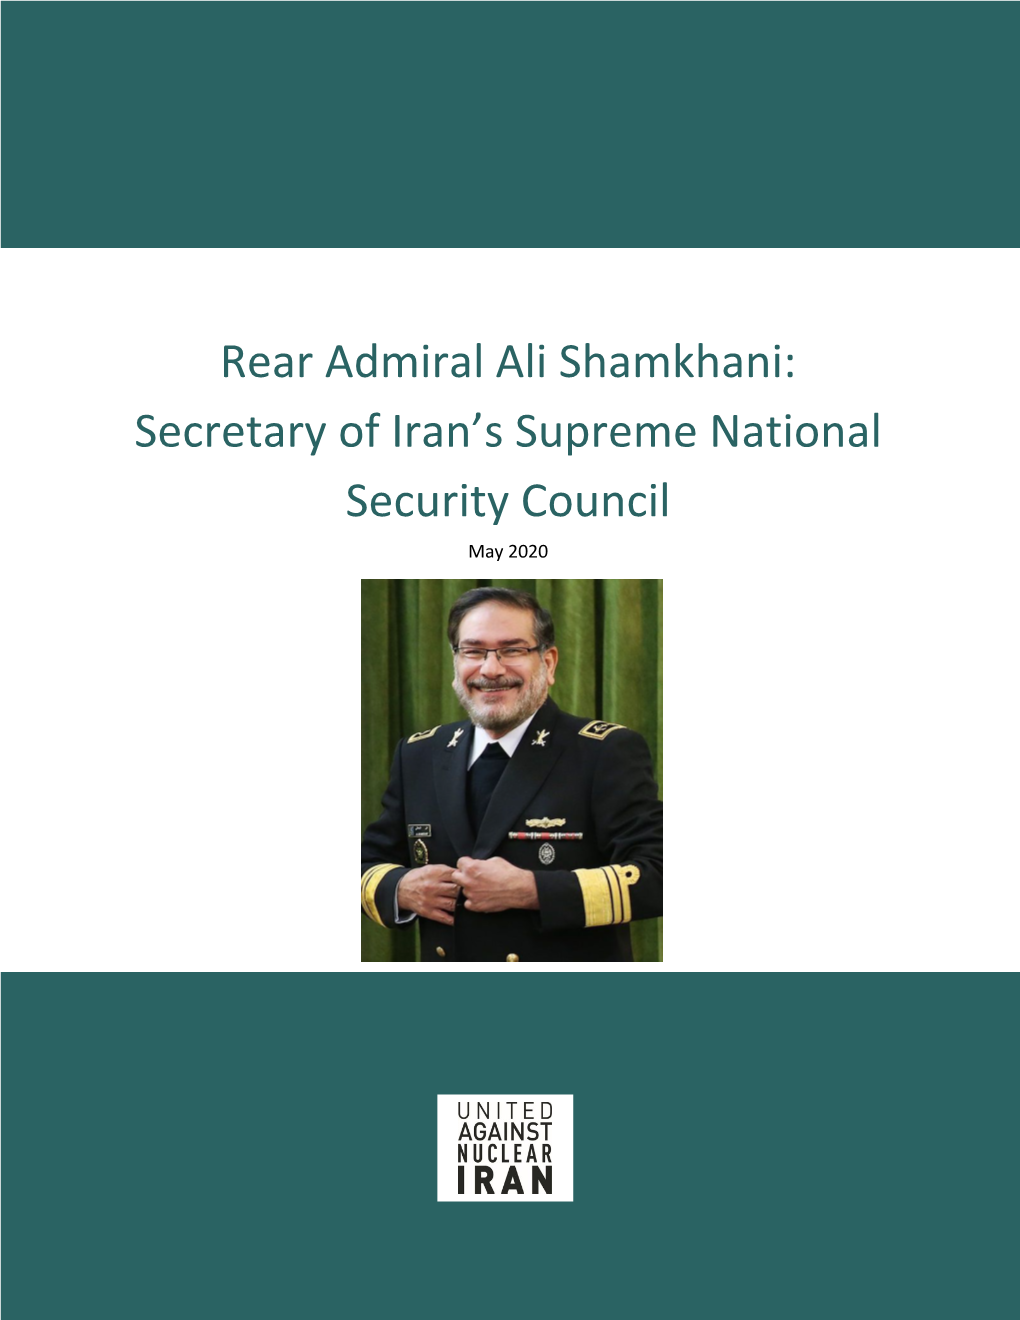 Rear Admiral Ali Shamkhani: Secretary of Iran’S Supreme National Security Council May 2020